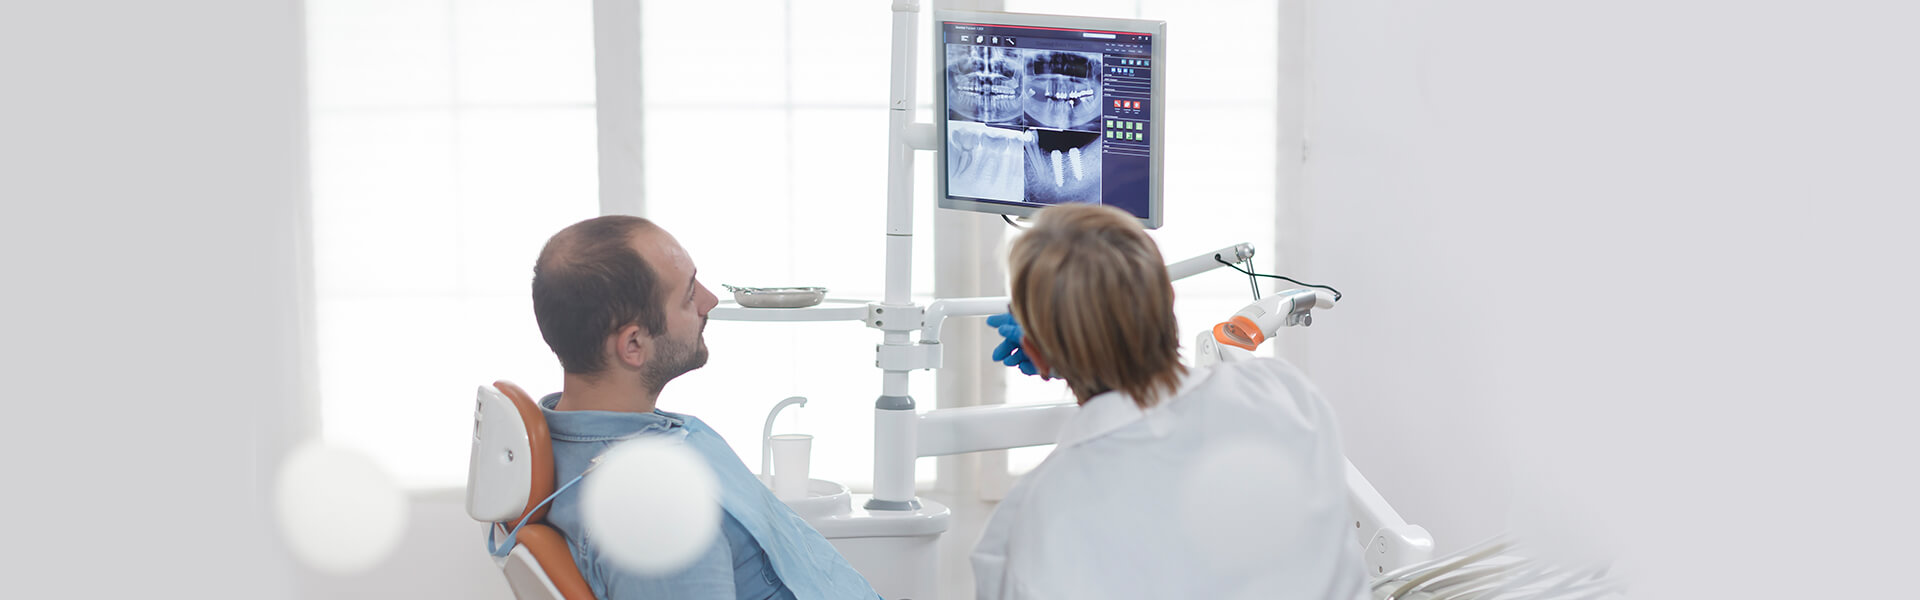 Digital Dental X-Rays, Their Procedure, Purpose & Types